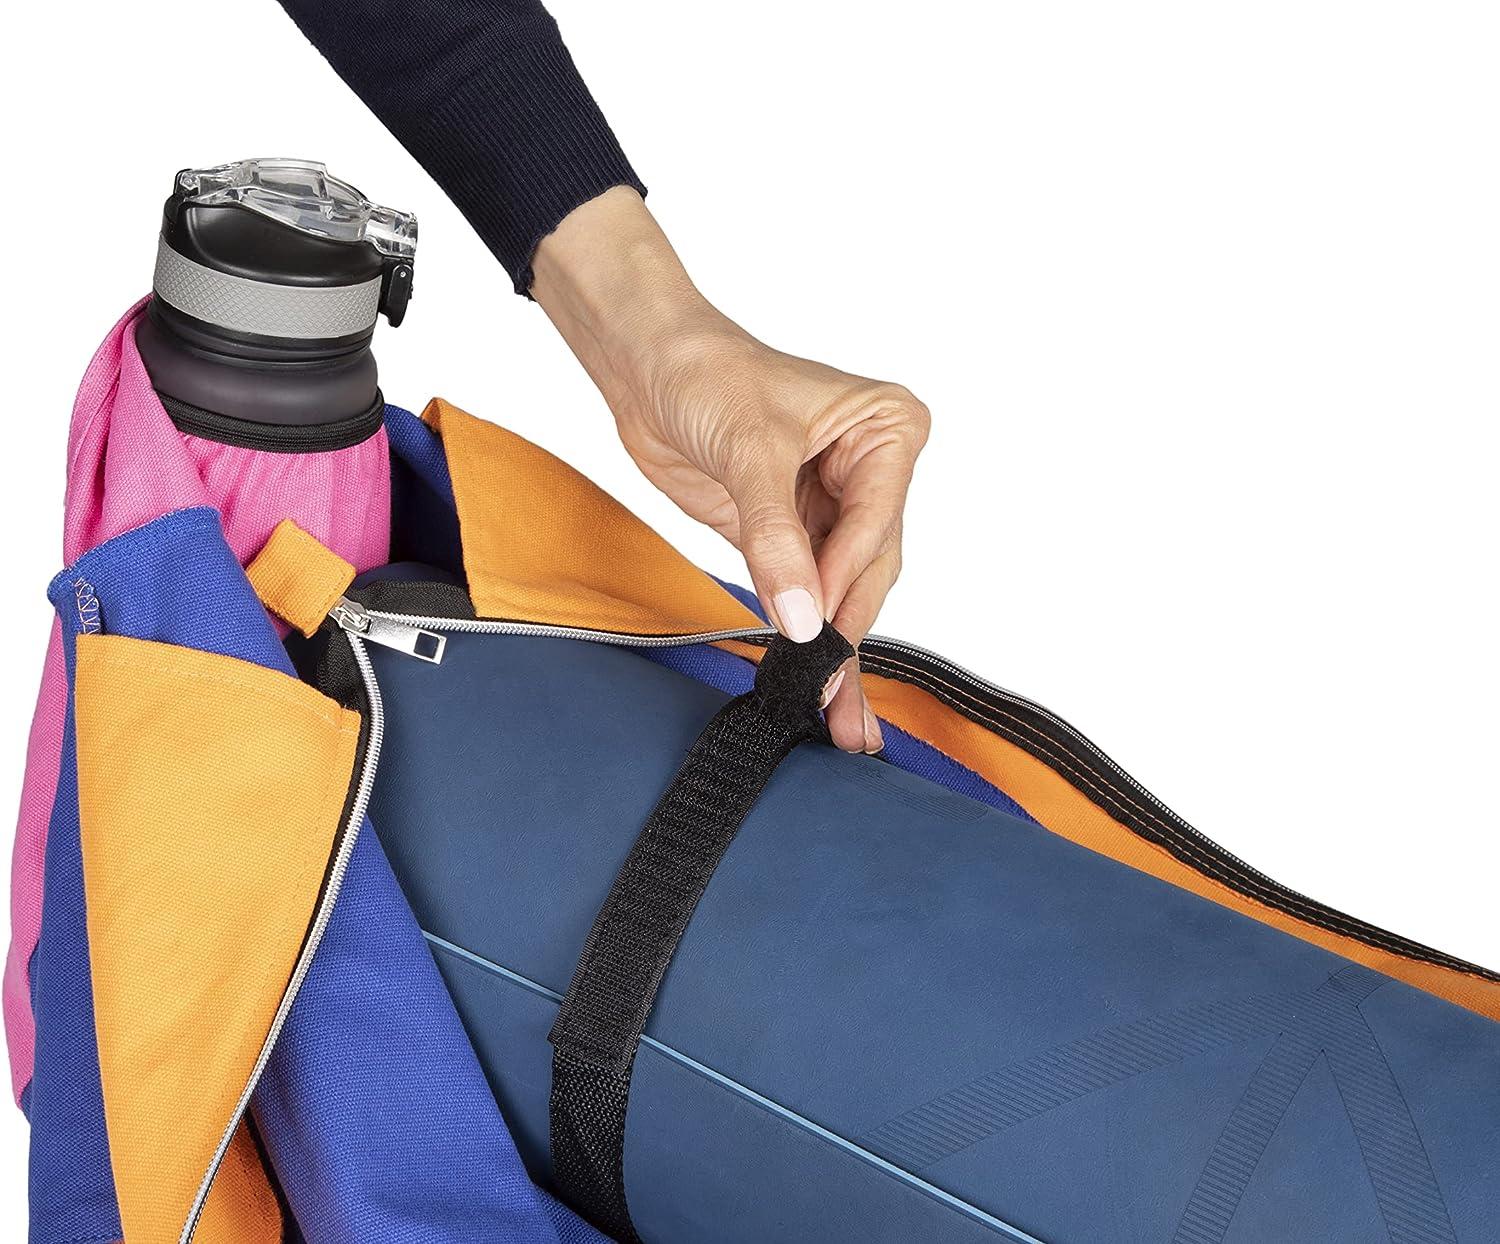 JoYnWell Large Yoga Mat Bag Carrier for Yoga Mats, Yoga Bolster